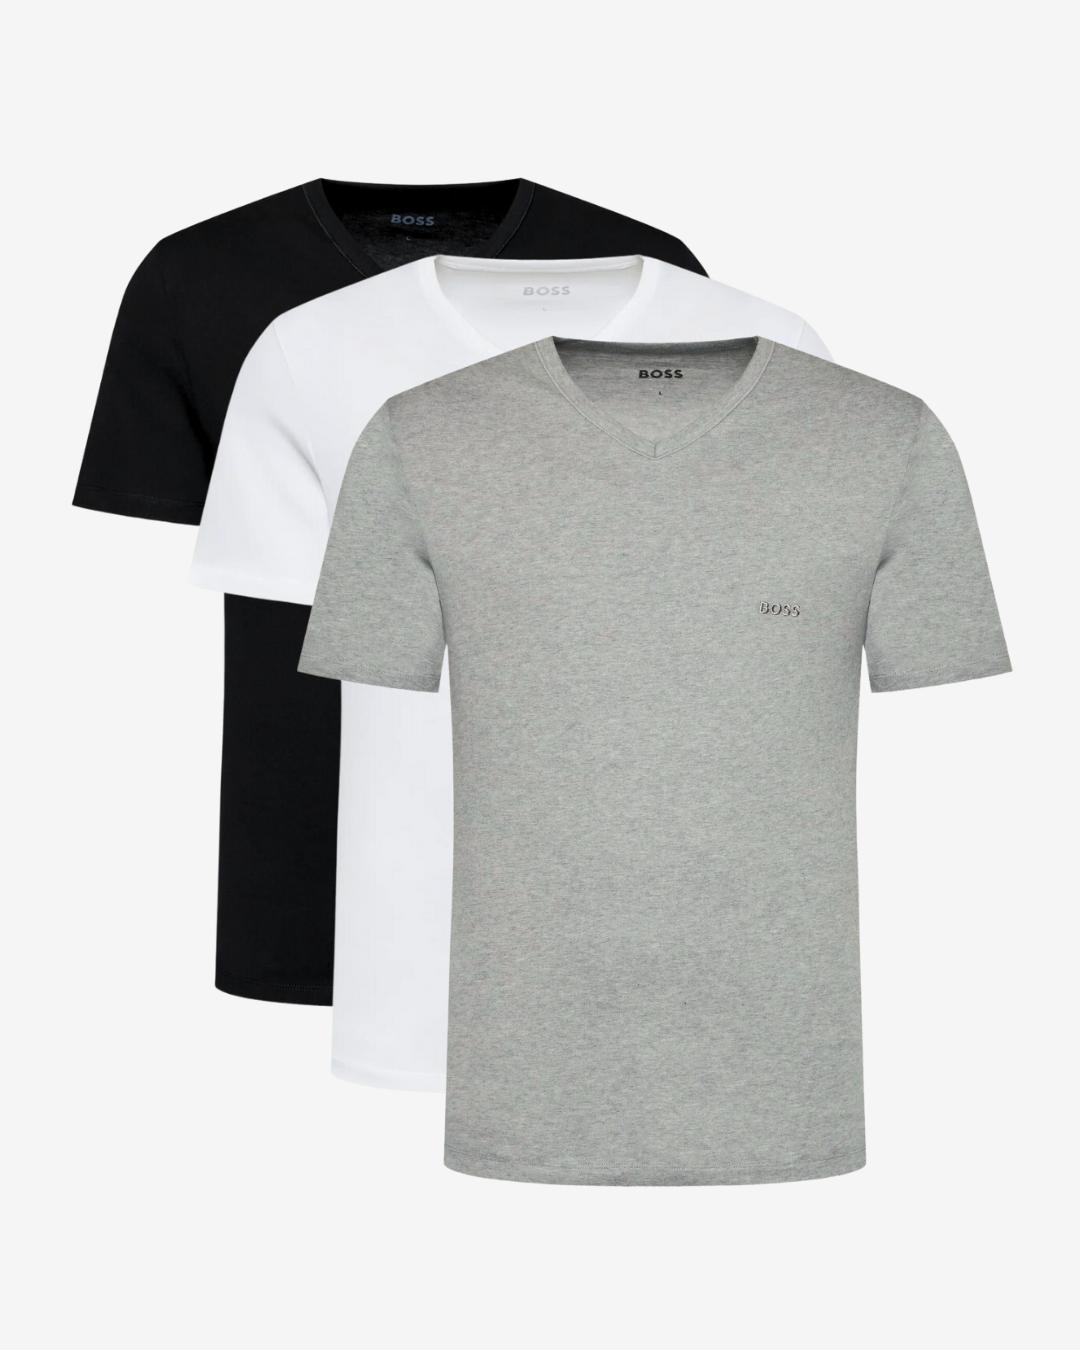 Se Hugo Boss 3-pak v-hals t-shirt - Sort / Grå / Hvid - Str. XXL - Modish.dk hos Modish.dk